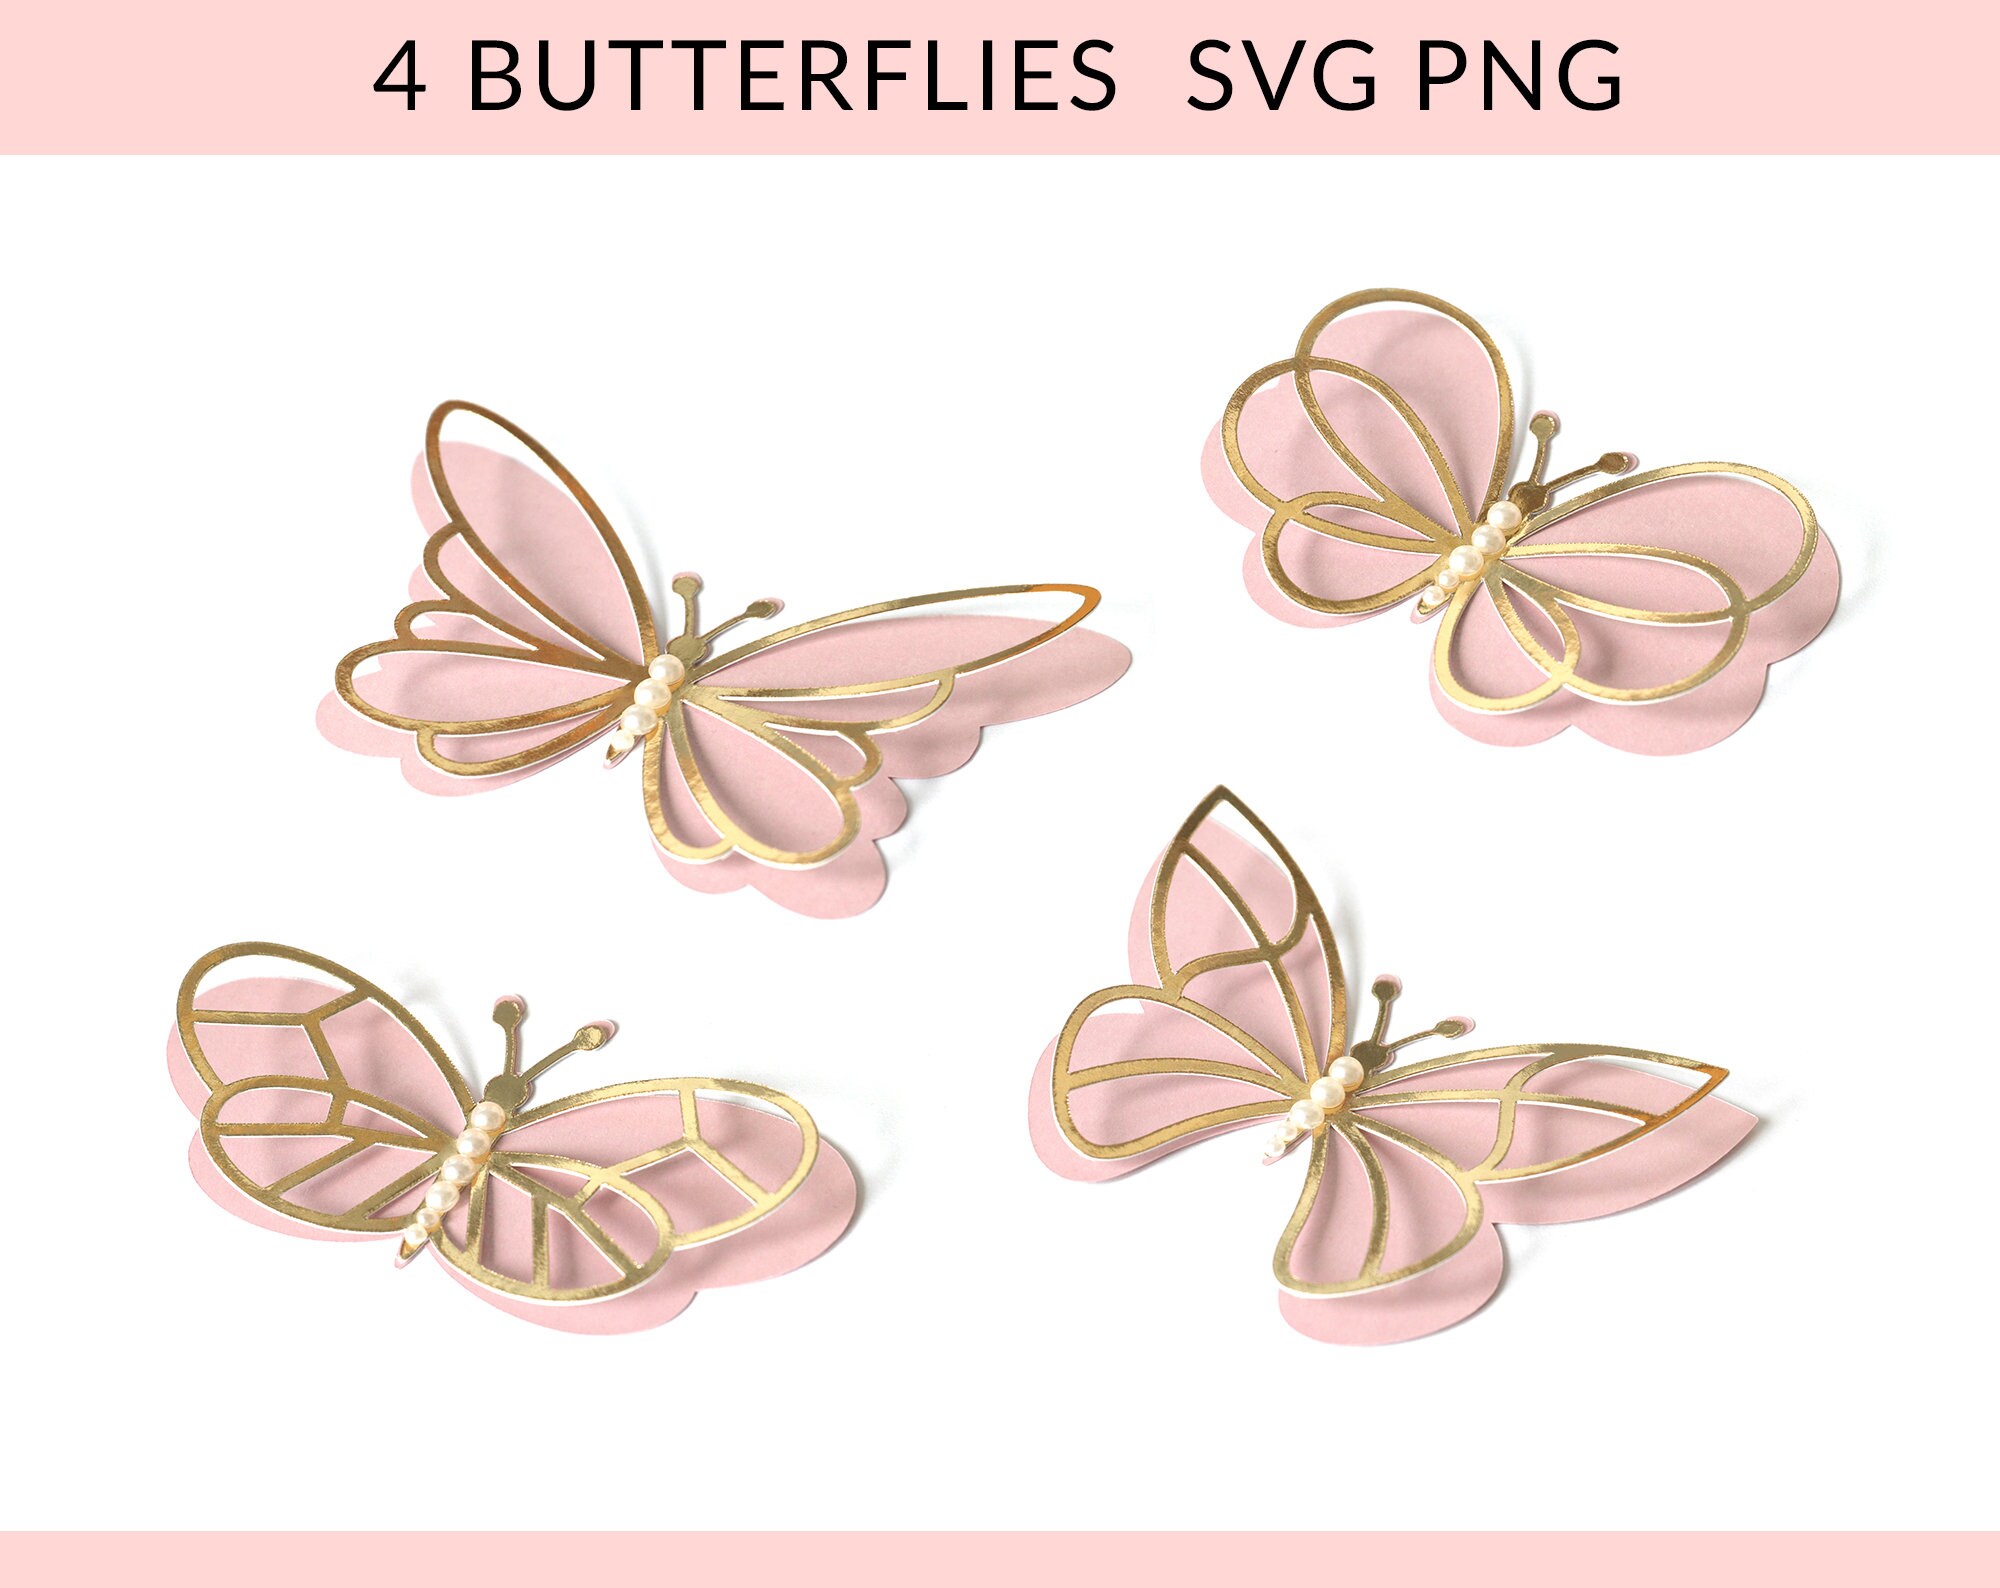 3D Butterfly SVG #1 Template - Creative Vector Studio